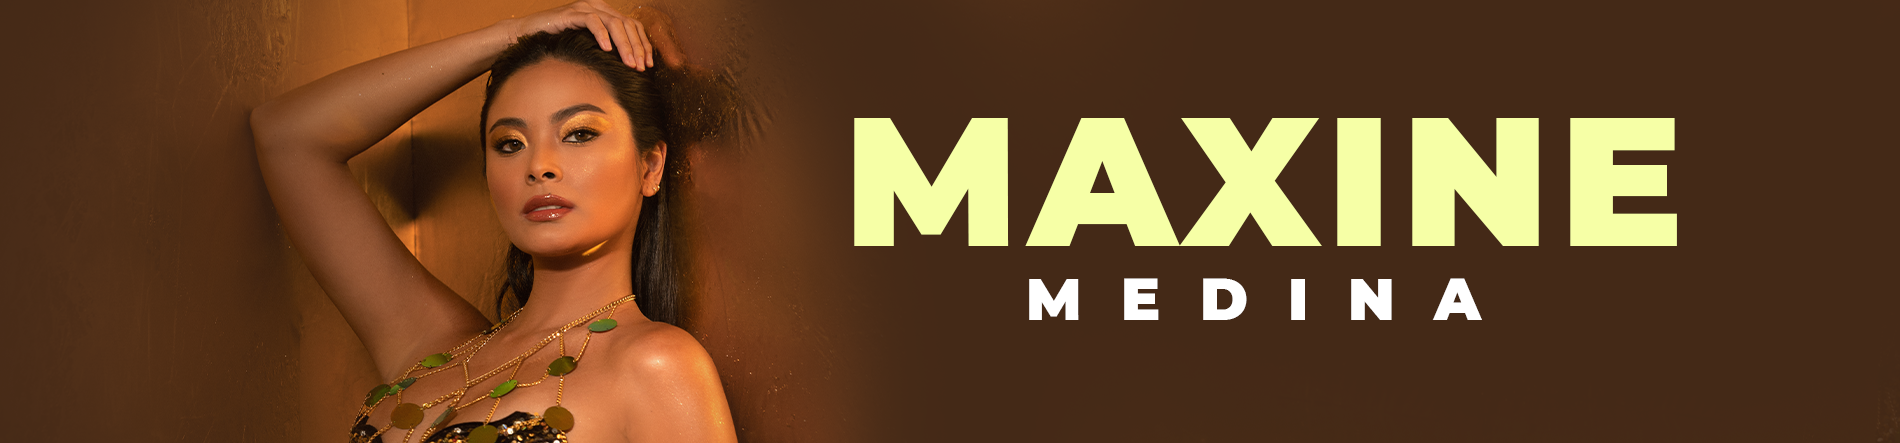 Maxine Medina Desktop Banner